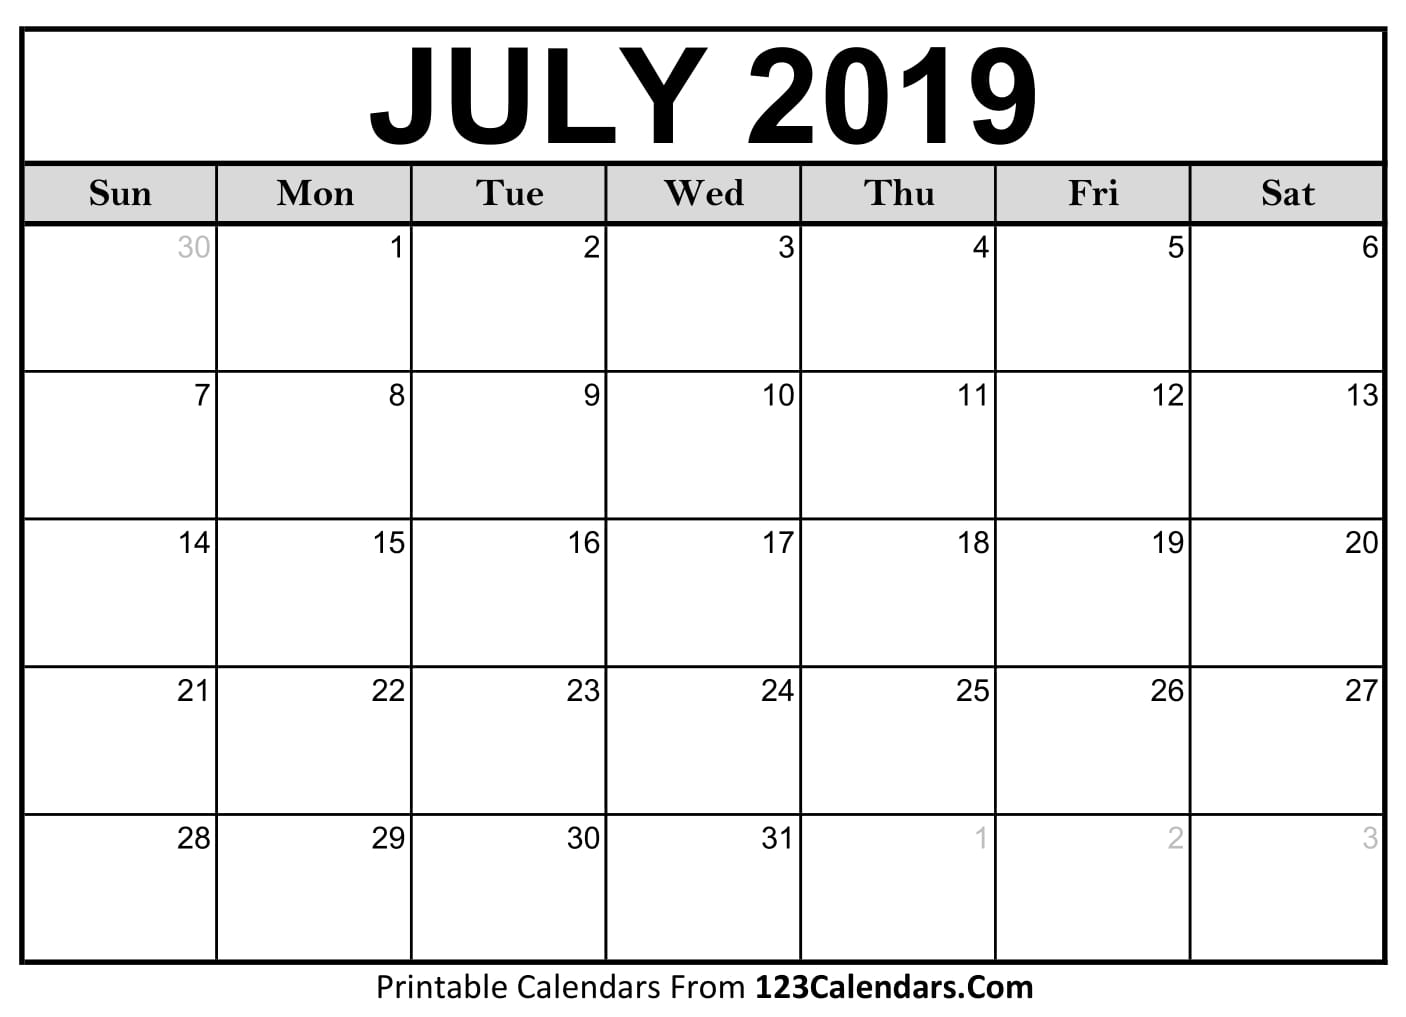 July 2019 Calendar Blank Easily Printable 123Calendars